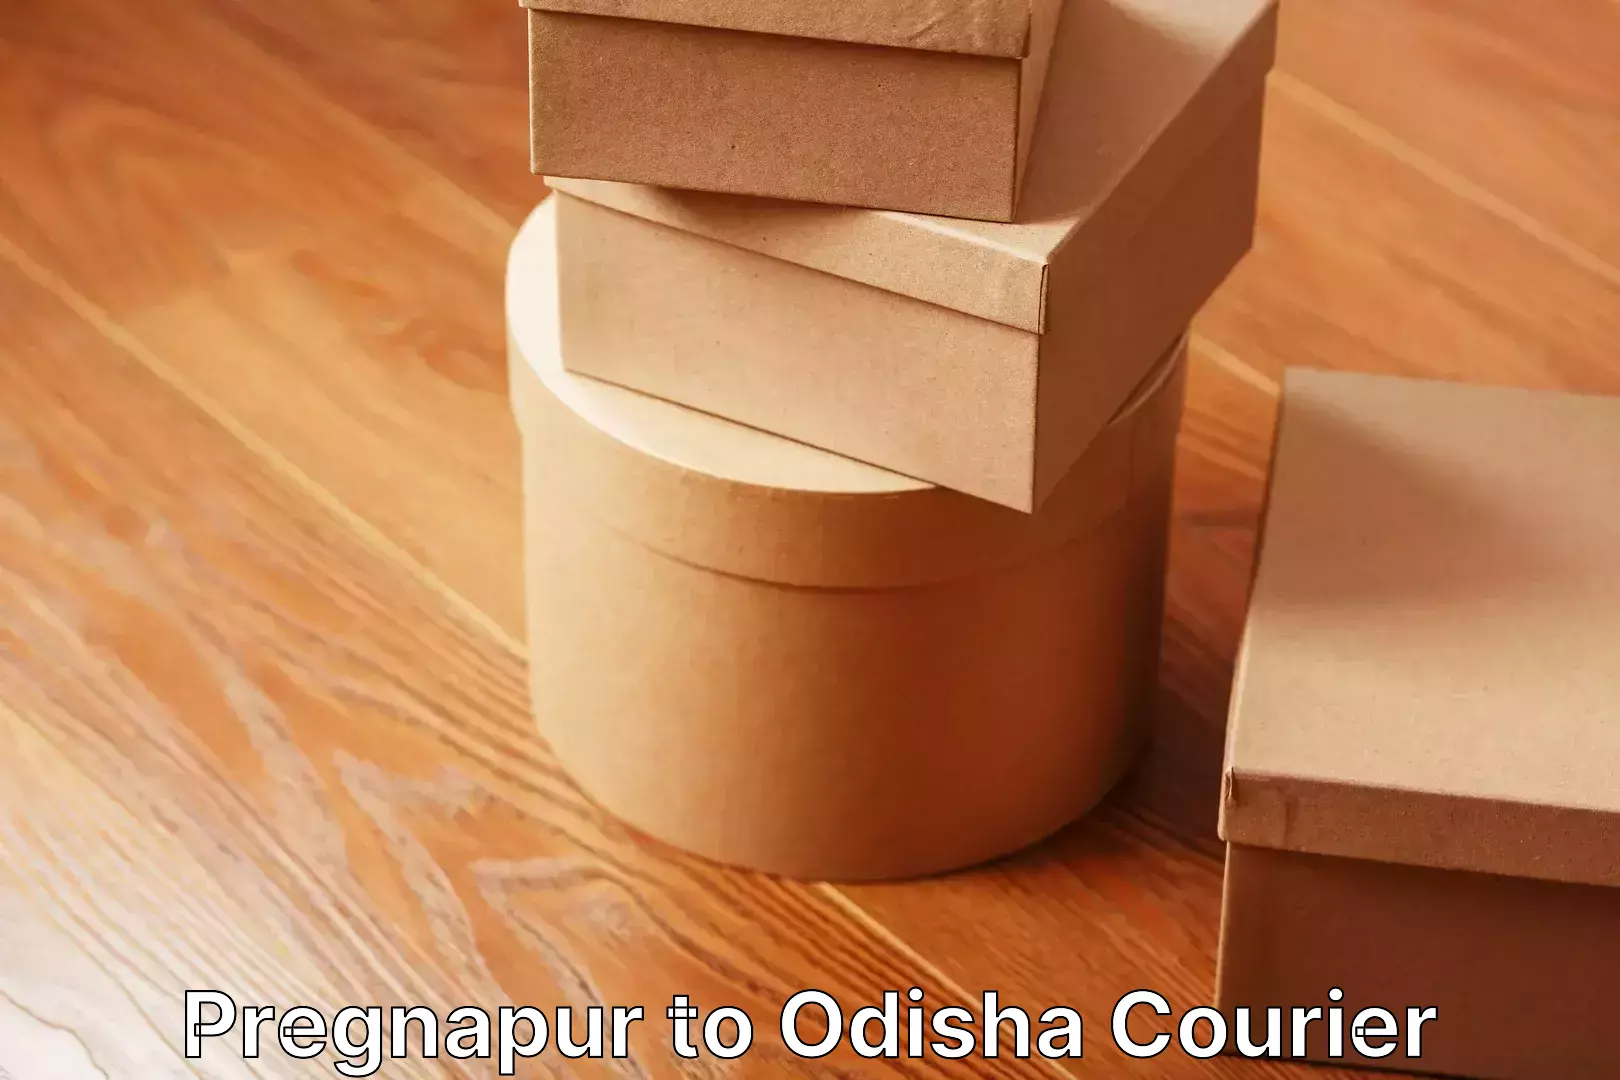 Professional packing services Pregnapur to Odisha